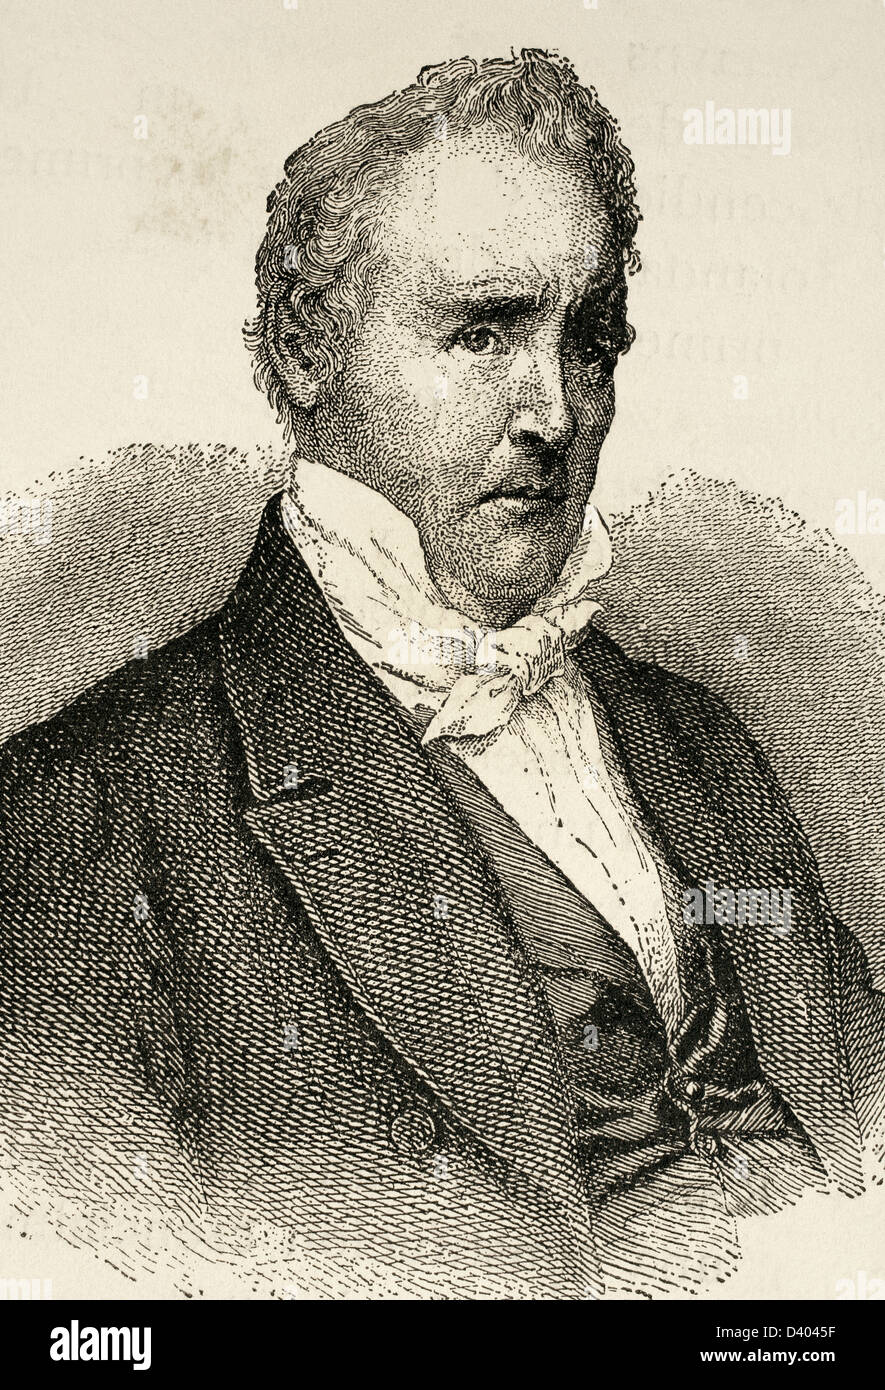 James Buchanan (1791-1868). US-amerikanischer Politiker. 15. Präsident der USA (1857-1861). Gravur. Stockfoto